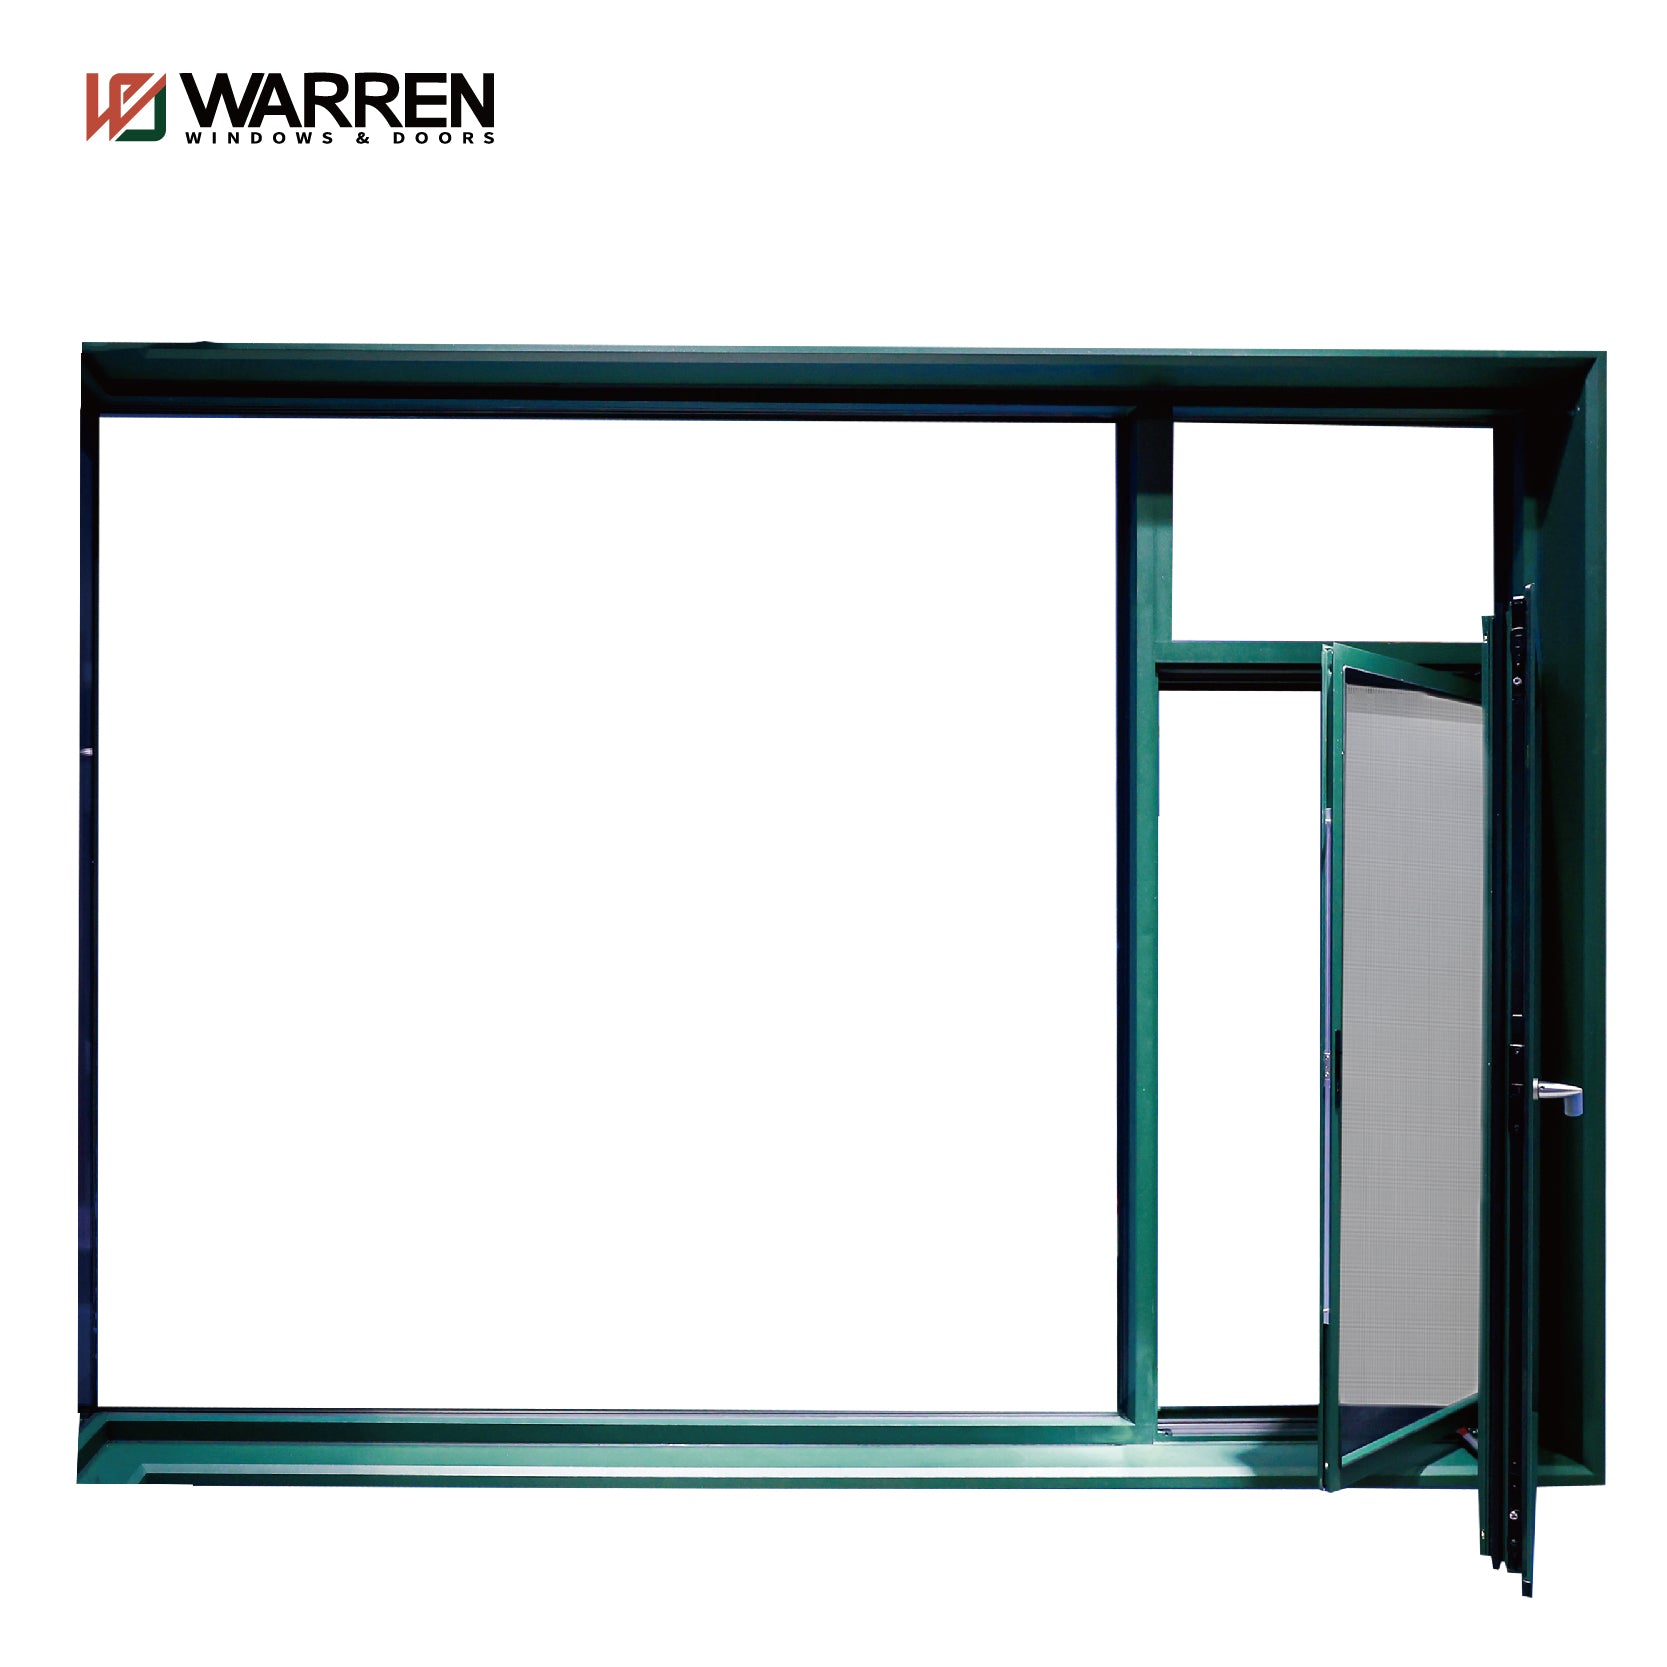 Warren Good Price Of New Design Top Quality Tilt Turn Windows  Two Casement Windows For All House